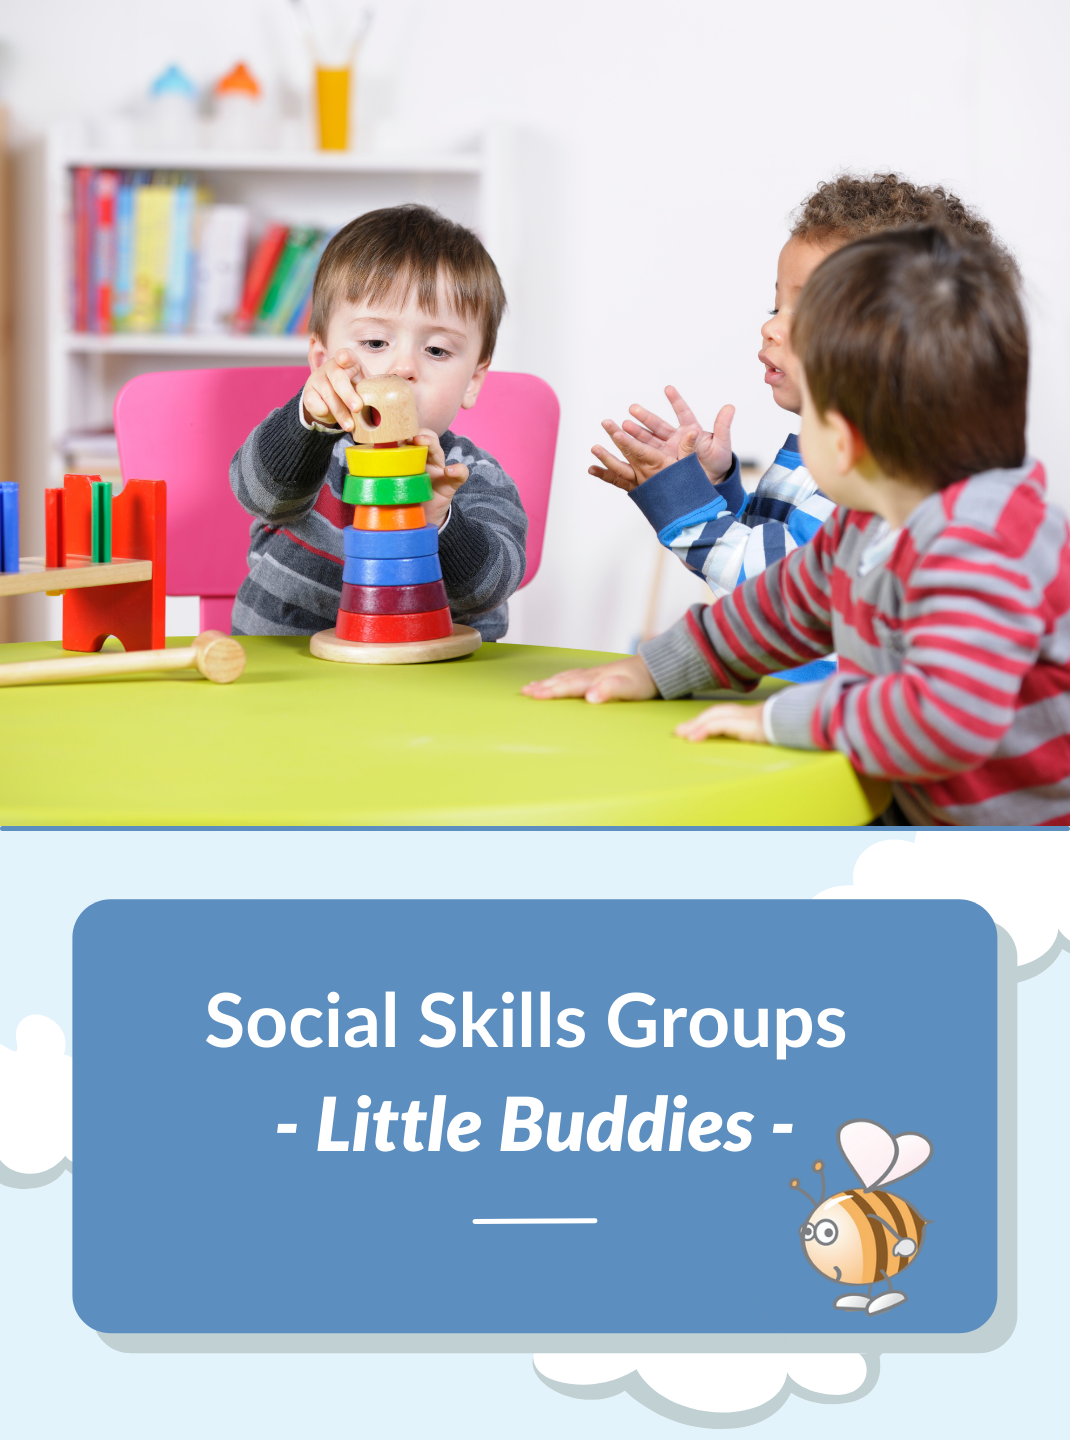 Social Skills Groups - Little Buddies